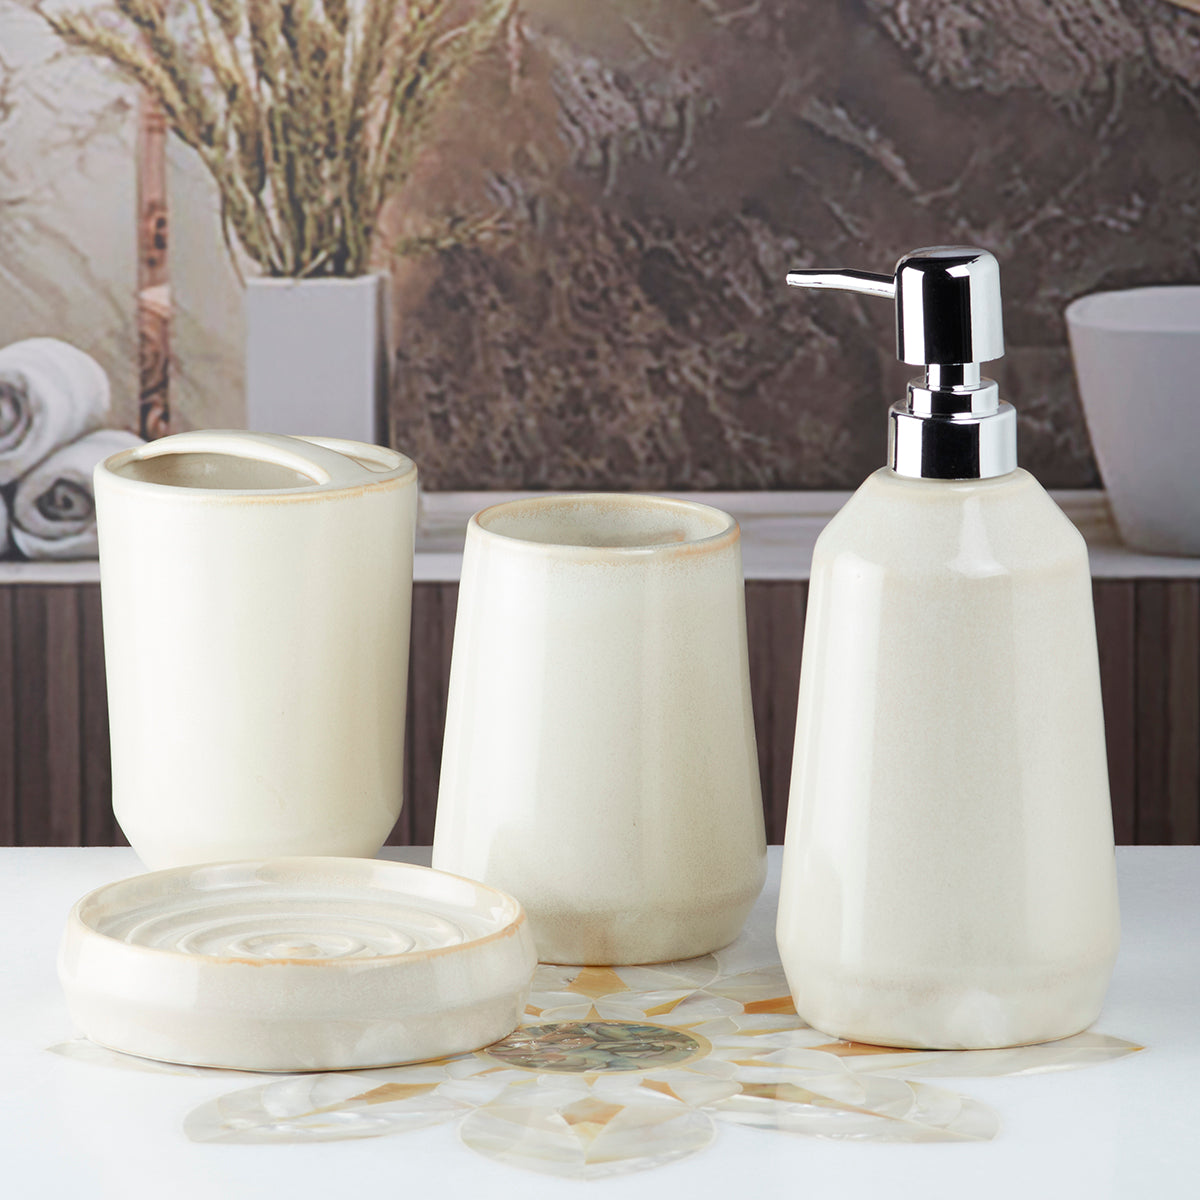 Ceramic Bathroom Accessories Set of 4 Bath Set with Soap Dispenser (7716)